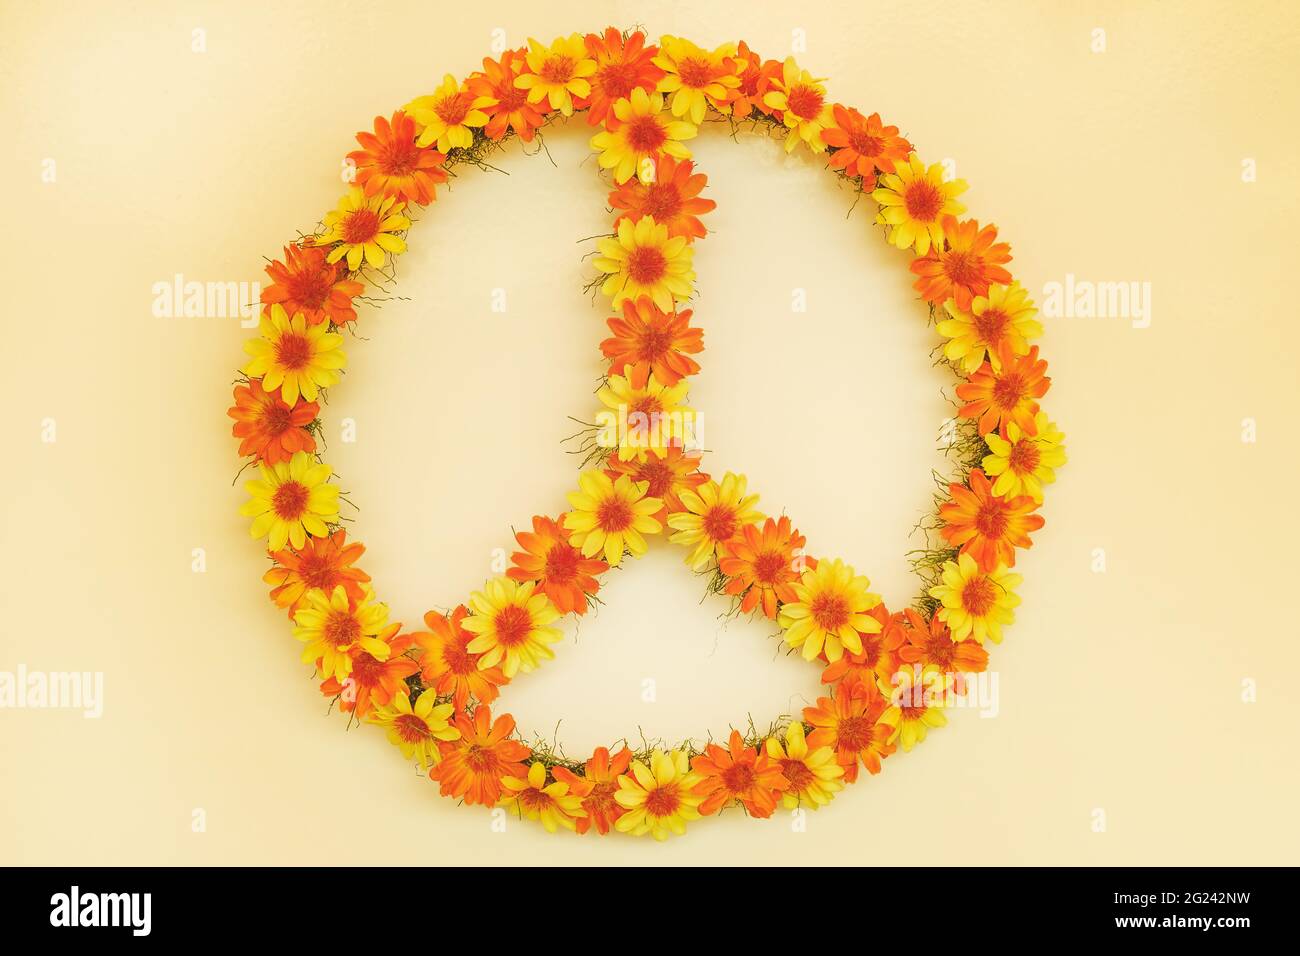 Free: 1960s Flower power Hippie Peace symbols, flower transparent